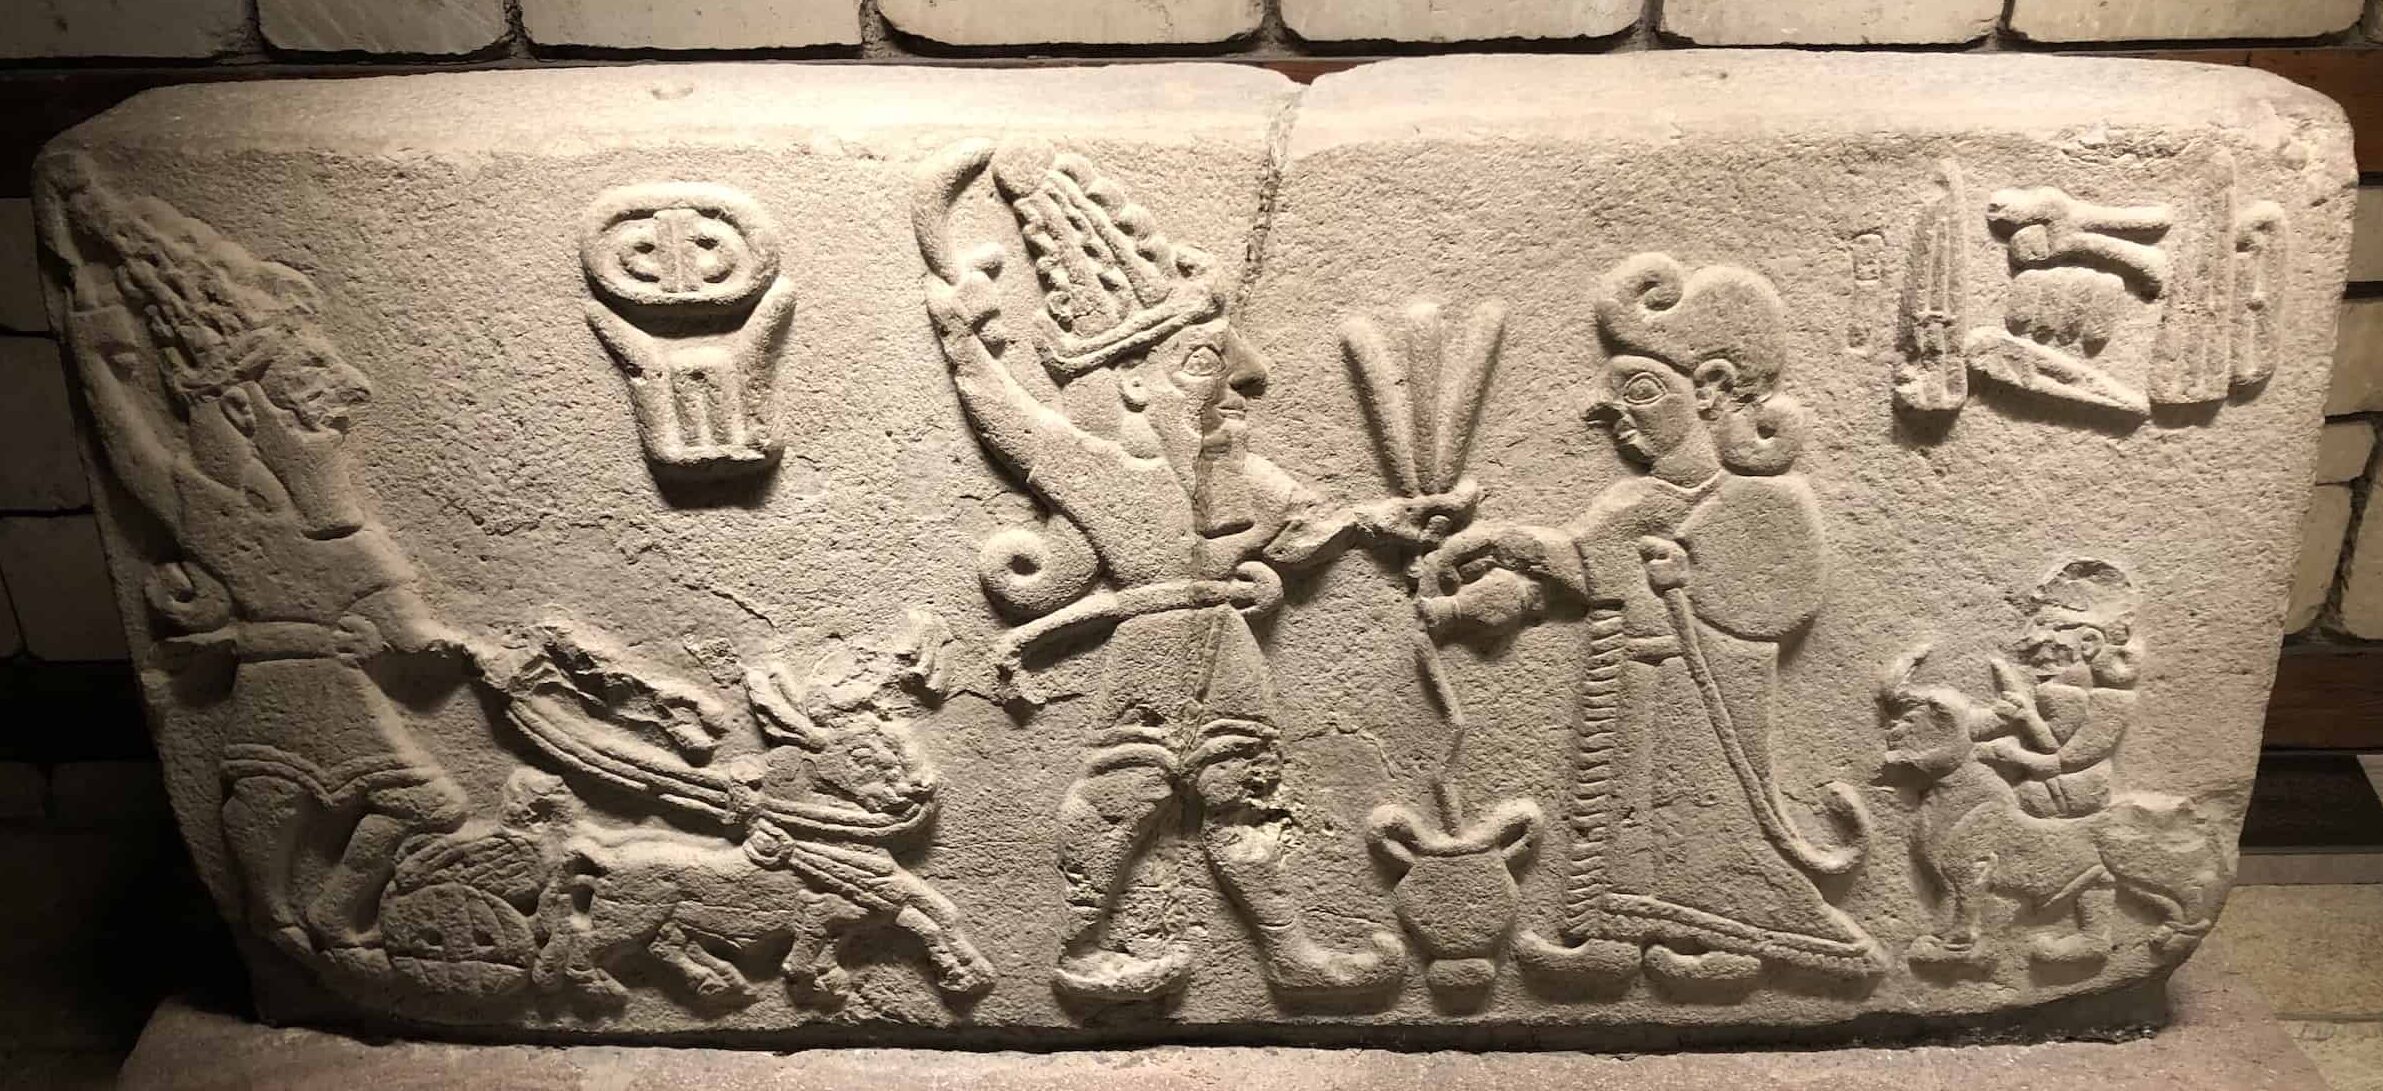 Aslantepe orthostats (Hittite) at the Museum of Anatolian Civilizations in Ankara, Turkey